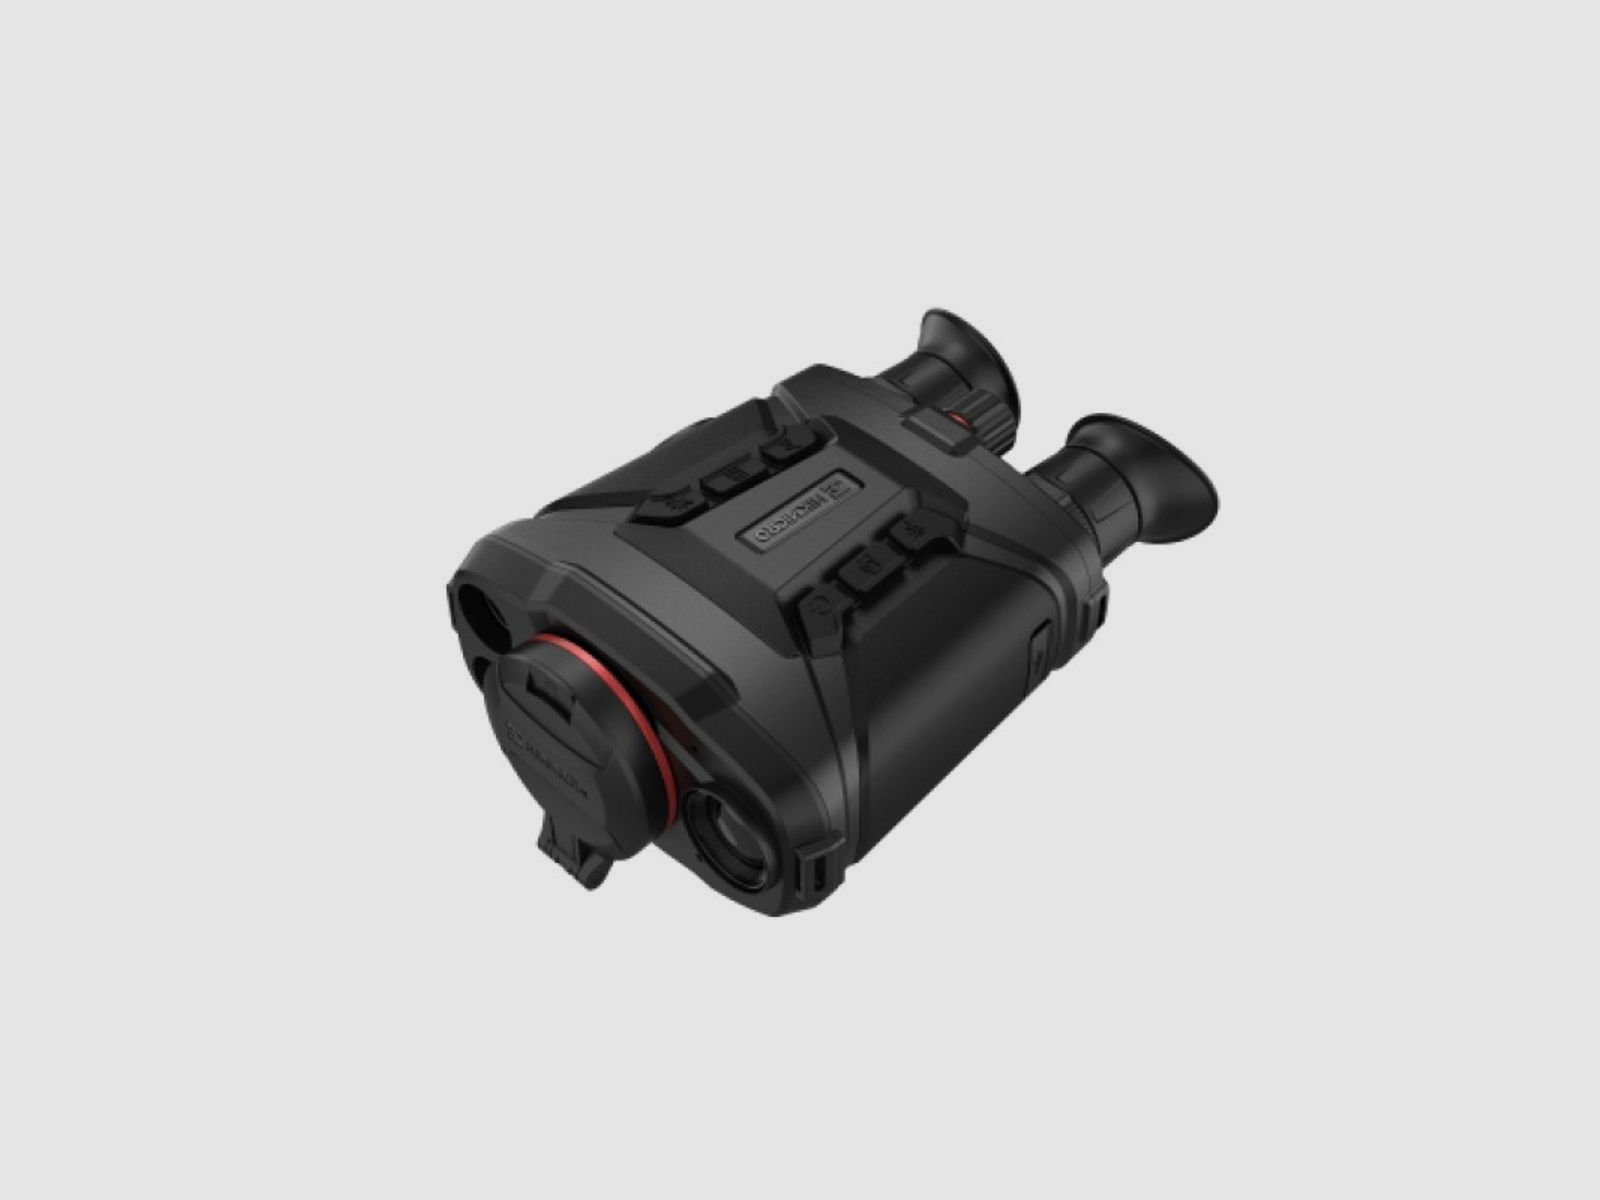 Hikmicro Raptor RQ50LN Binocular Wärmebildgerät